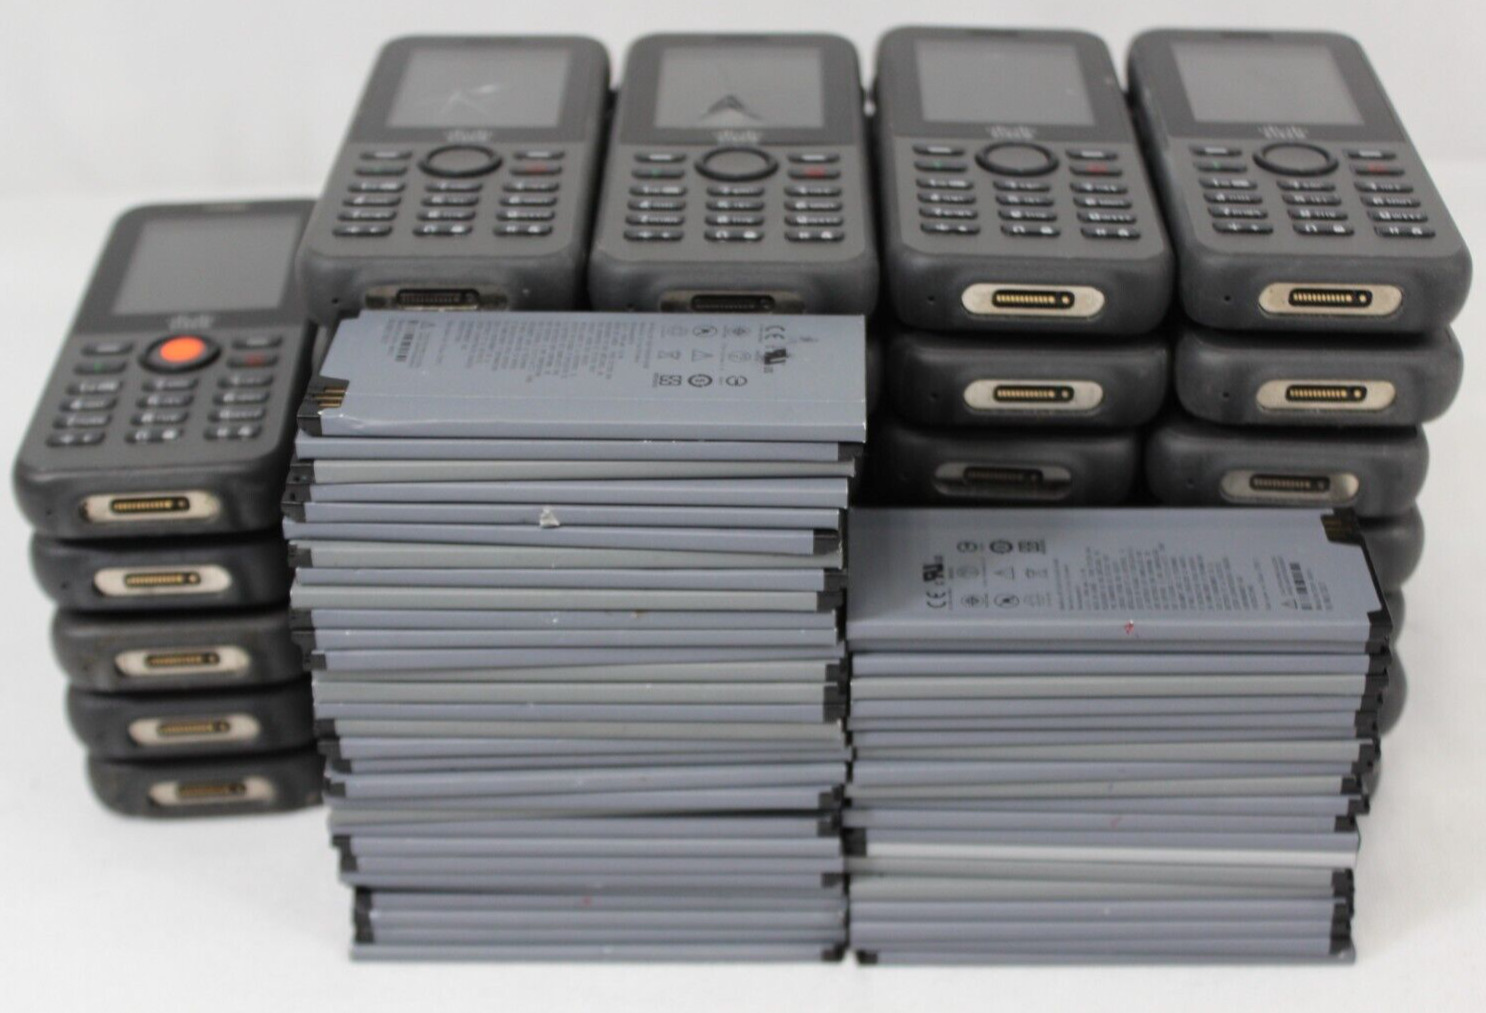 Lot of 33 Cisco CP-8821 VOIP Phones - Mixed Grade